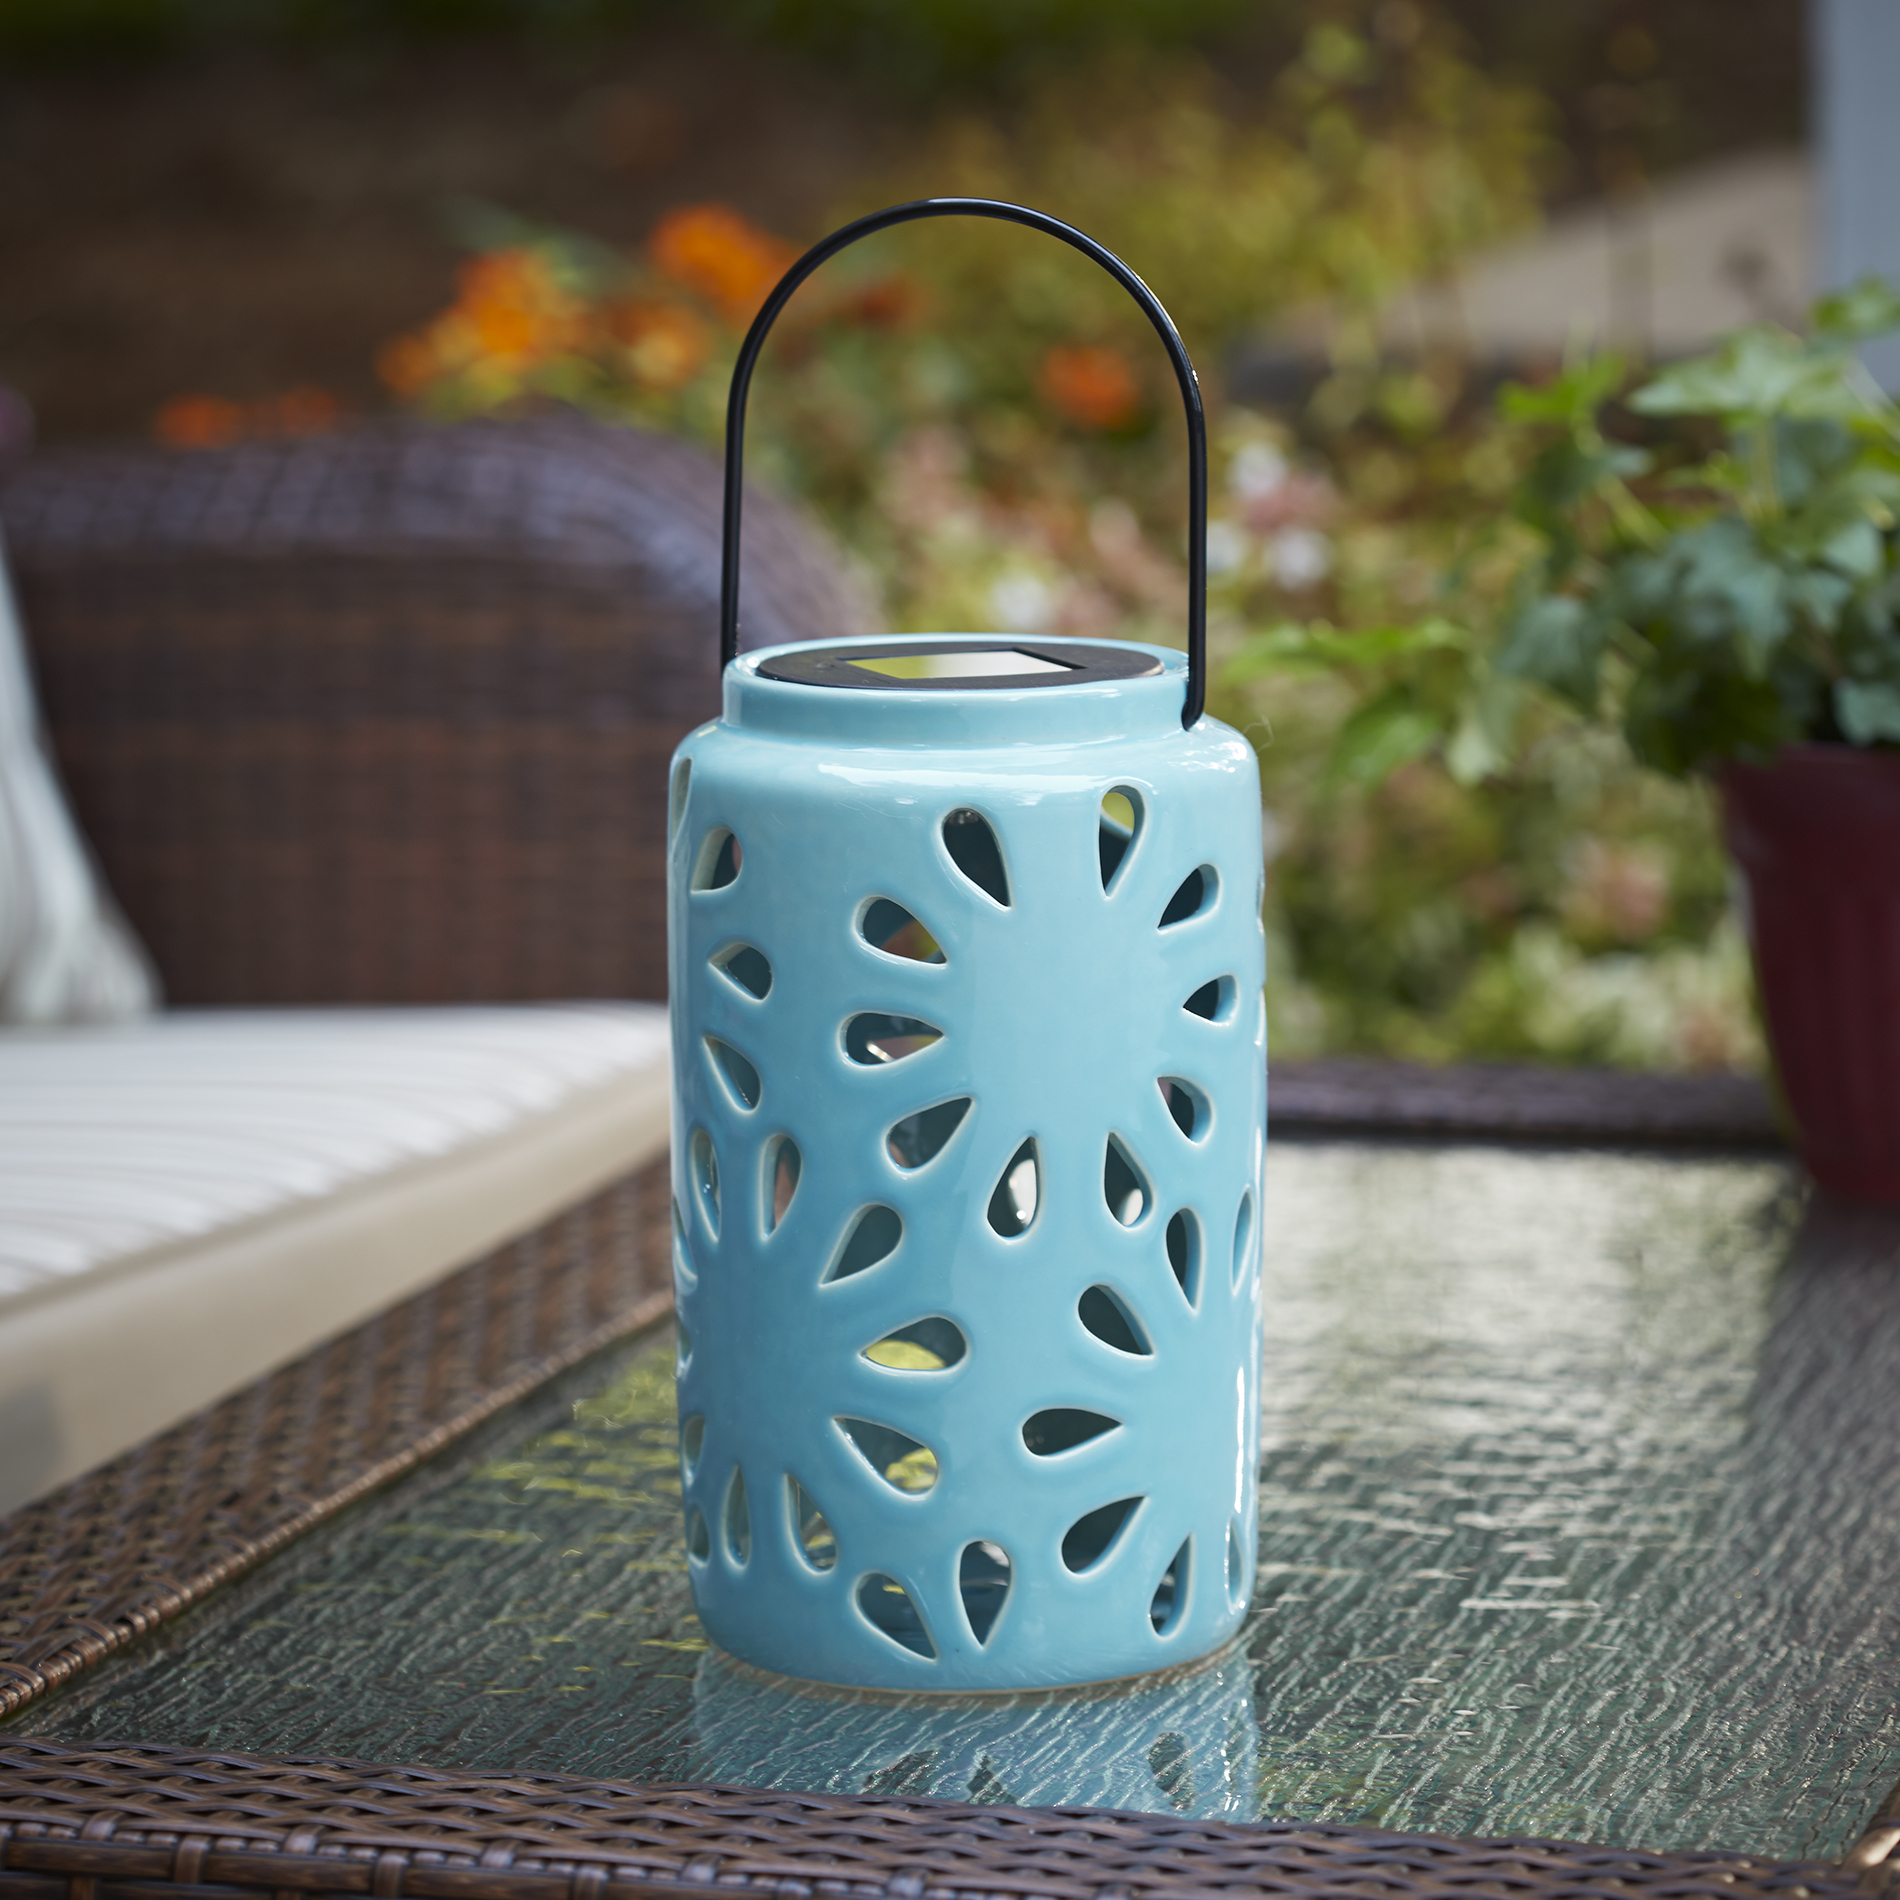 Opalhouse 3" Mini Ceramic Tea Light Outdoor Lantern Turquoise. New